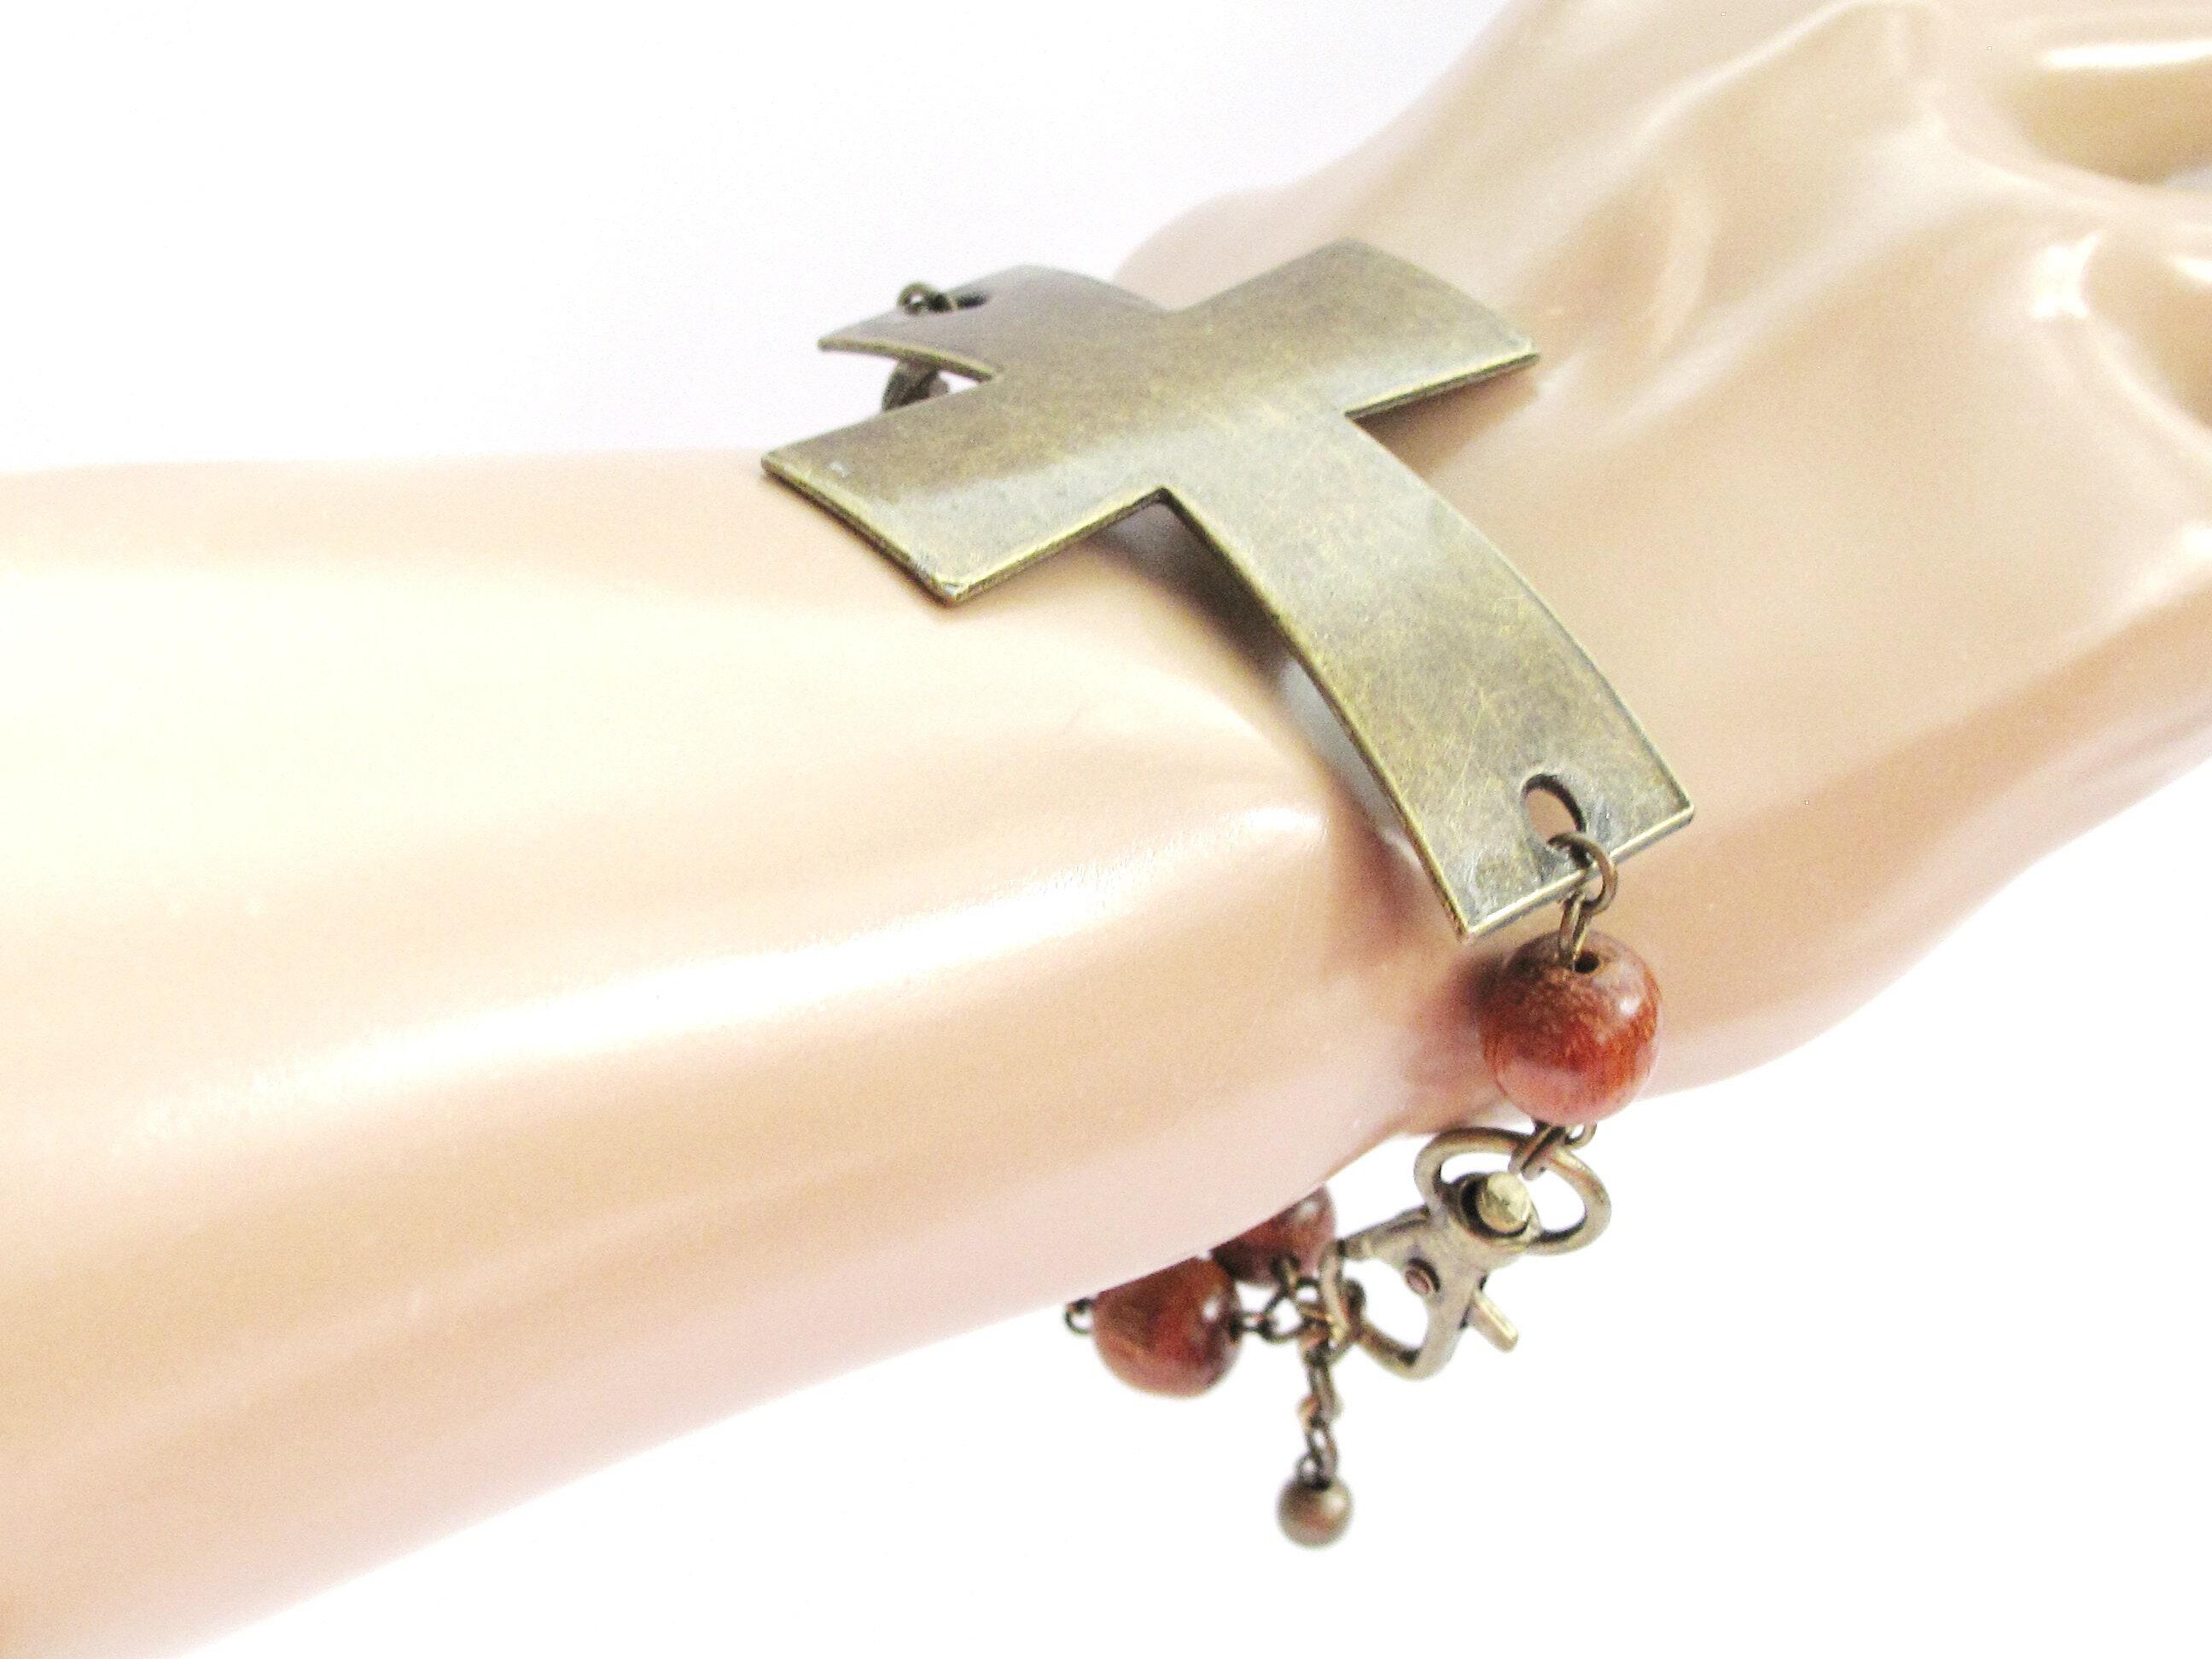 Catholic Agarwood Bracelet With Divine Cross Beads 12mm - Organic